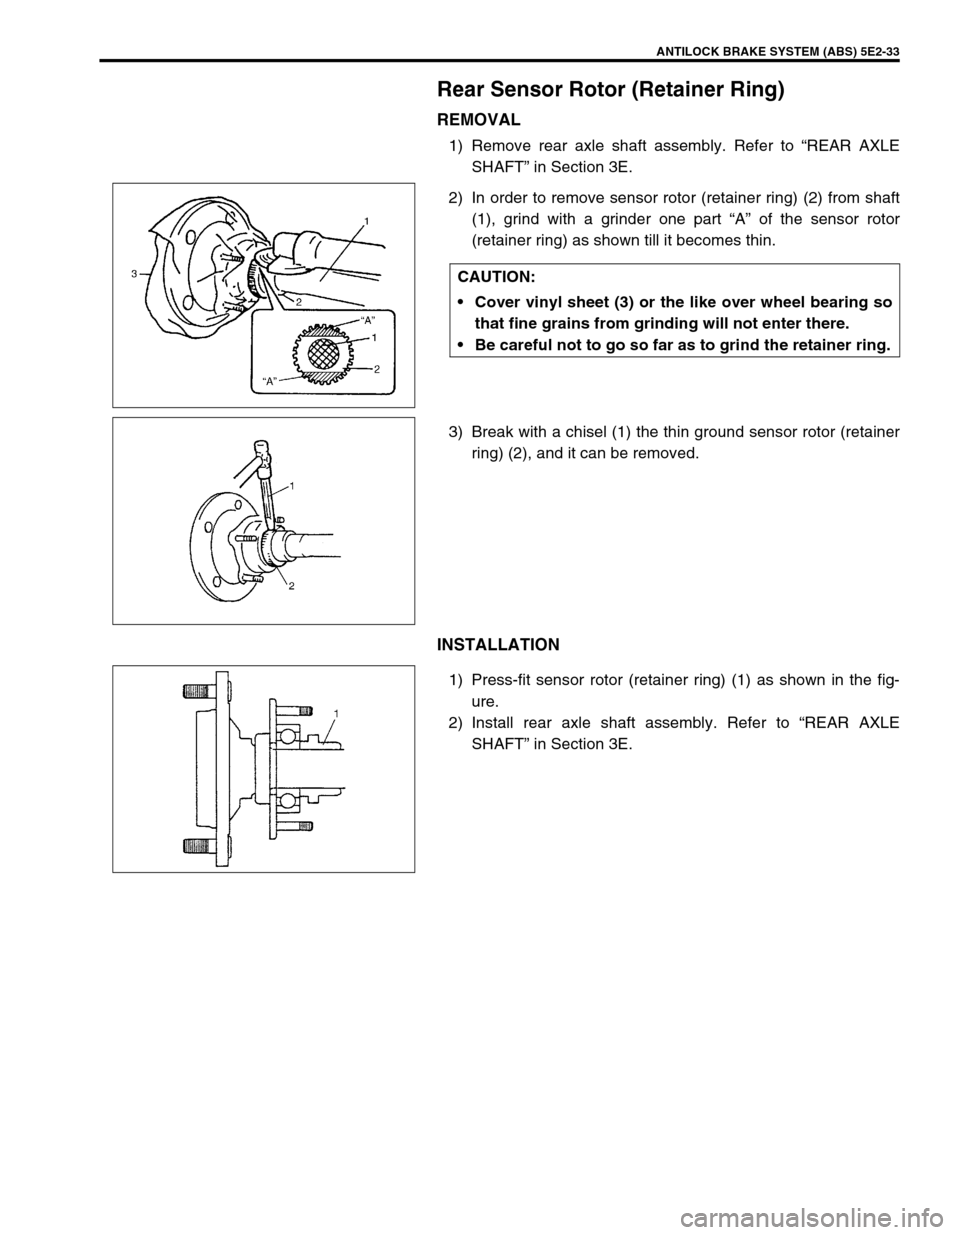 SUZUKI GRAND VITARA 1999 2.G User Guide ANTILOCK BRAKE SYSTEM (ABS) 5E2-33
Rear Sensor Rotor (Retainer Ring)
REMOVAL
1) Remove rear axle shaft assembly. Refer to “REAR AXLE
SHAFT” in Section 3E.
2) In order to remove sensor rotor (retai